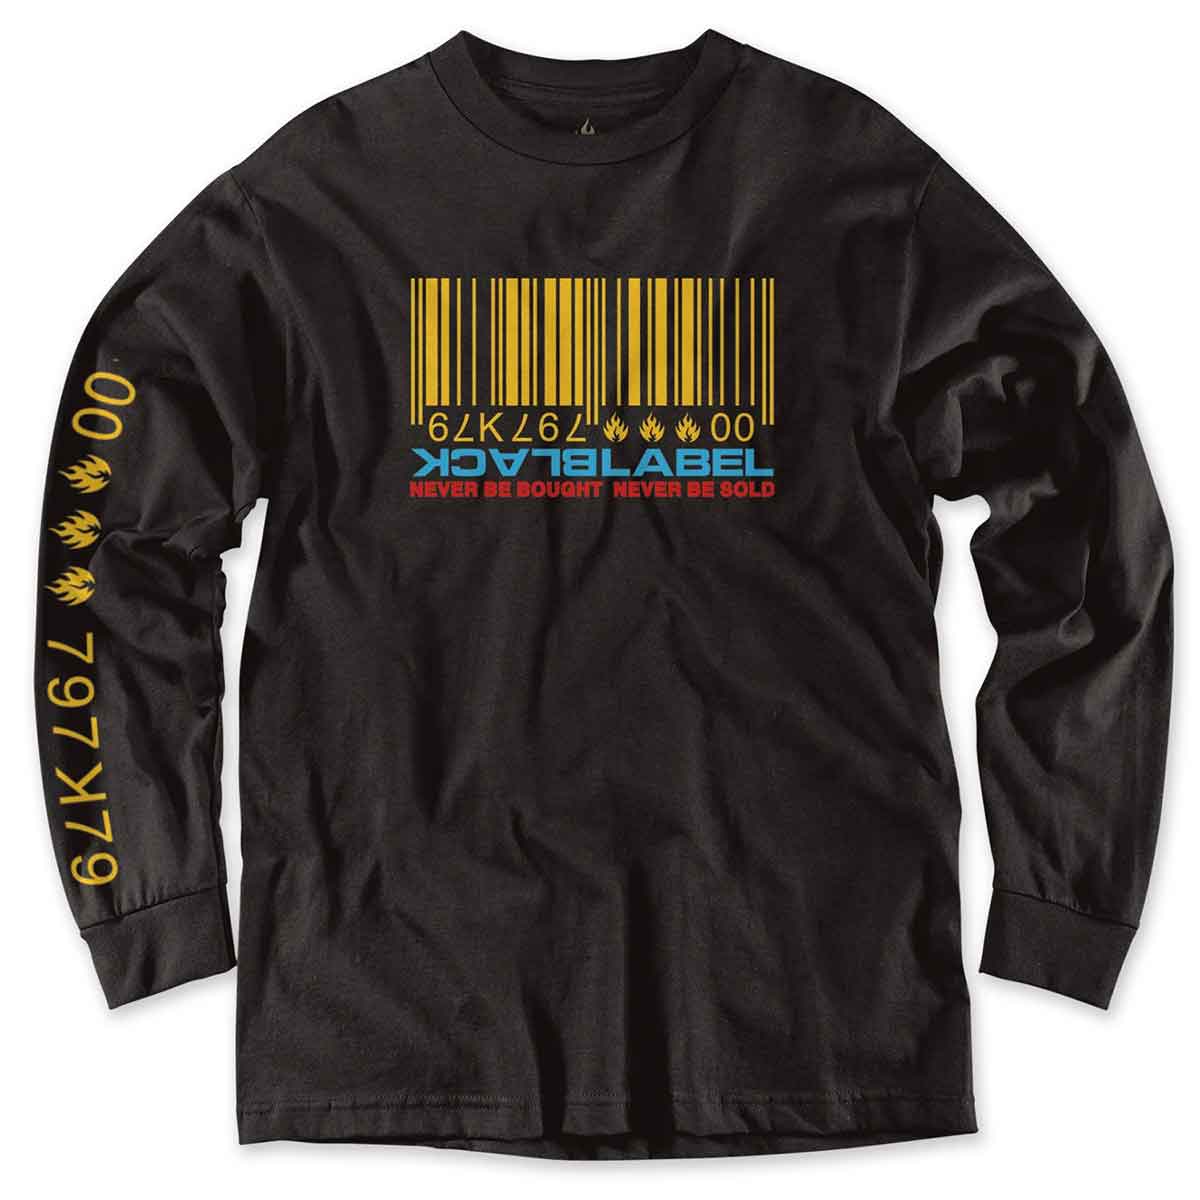 Label | Skateshop Black T-Shirt Black - Skateboards Barcode Long Sleeve SoCal